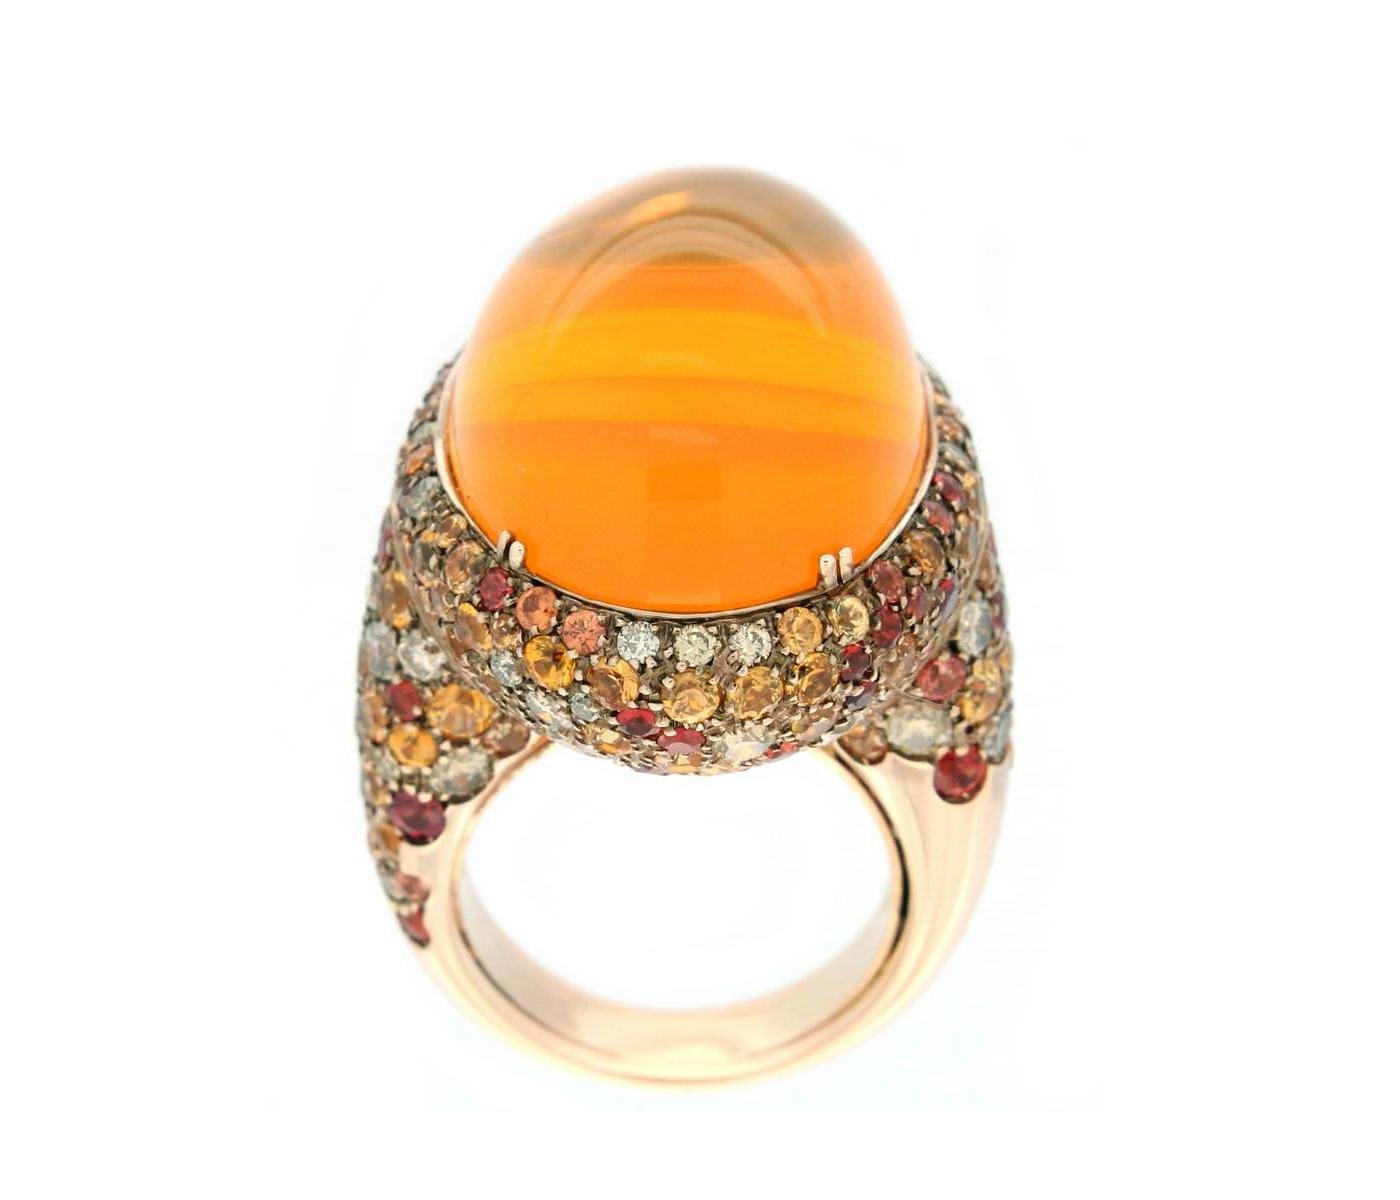 Ring by Luxor Gioielli